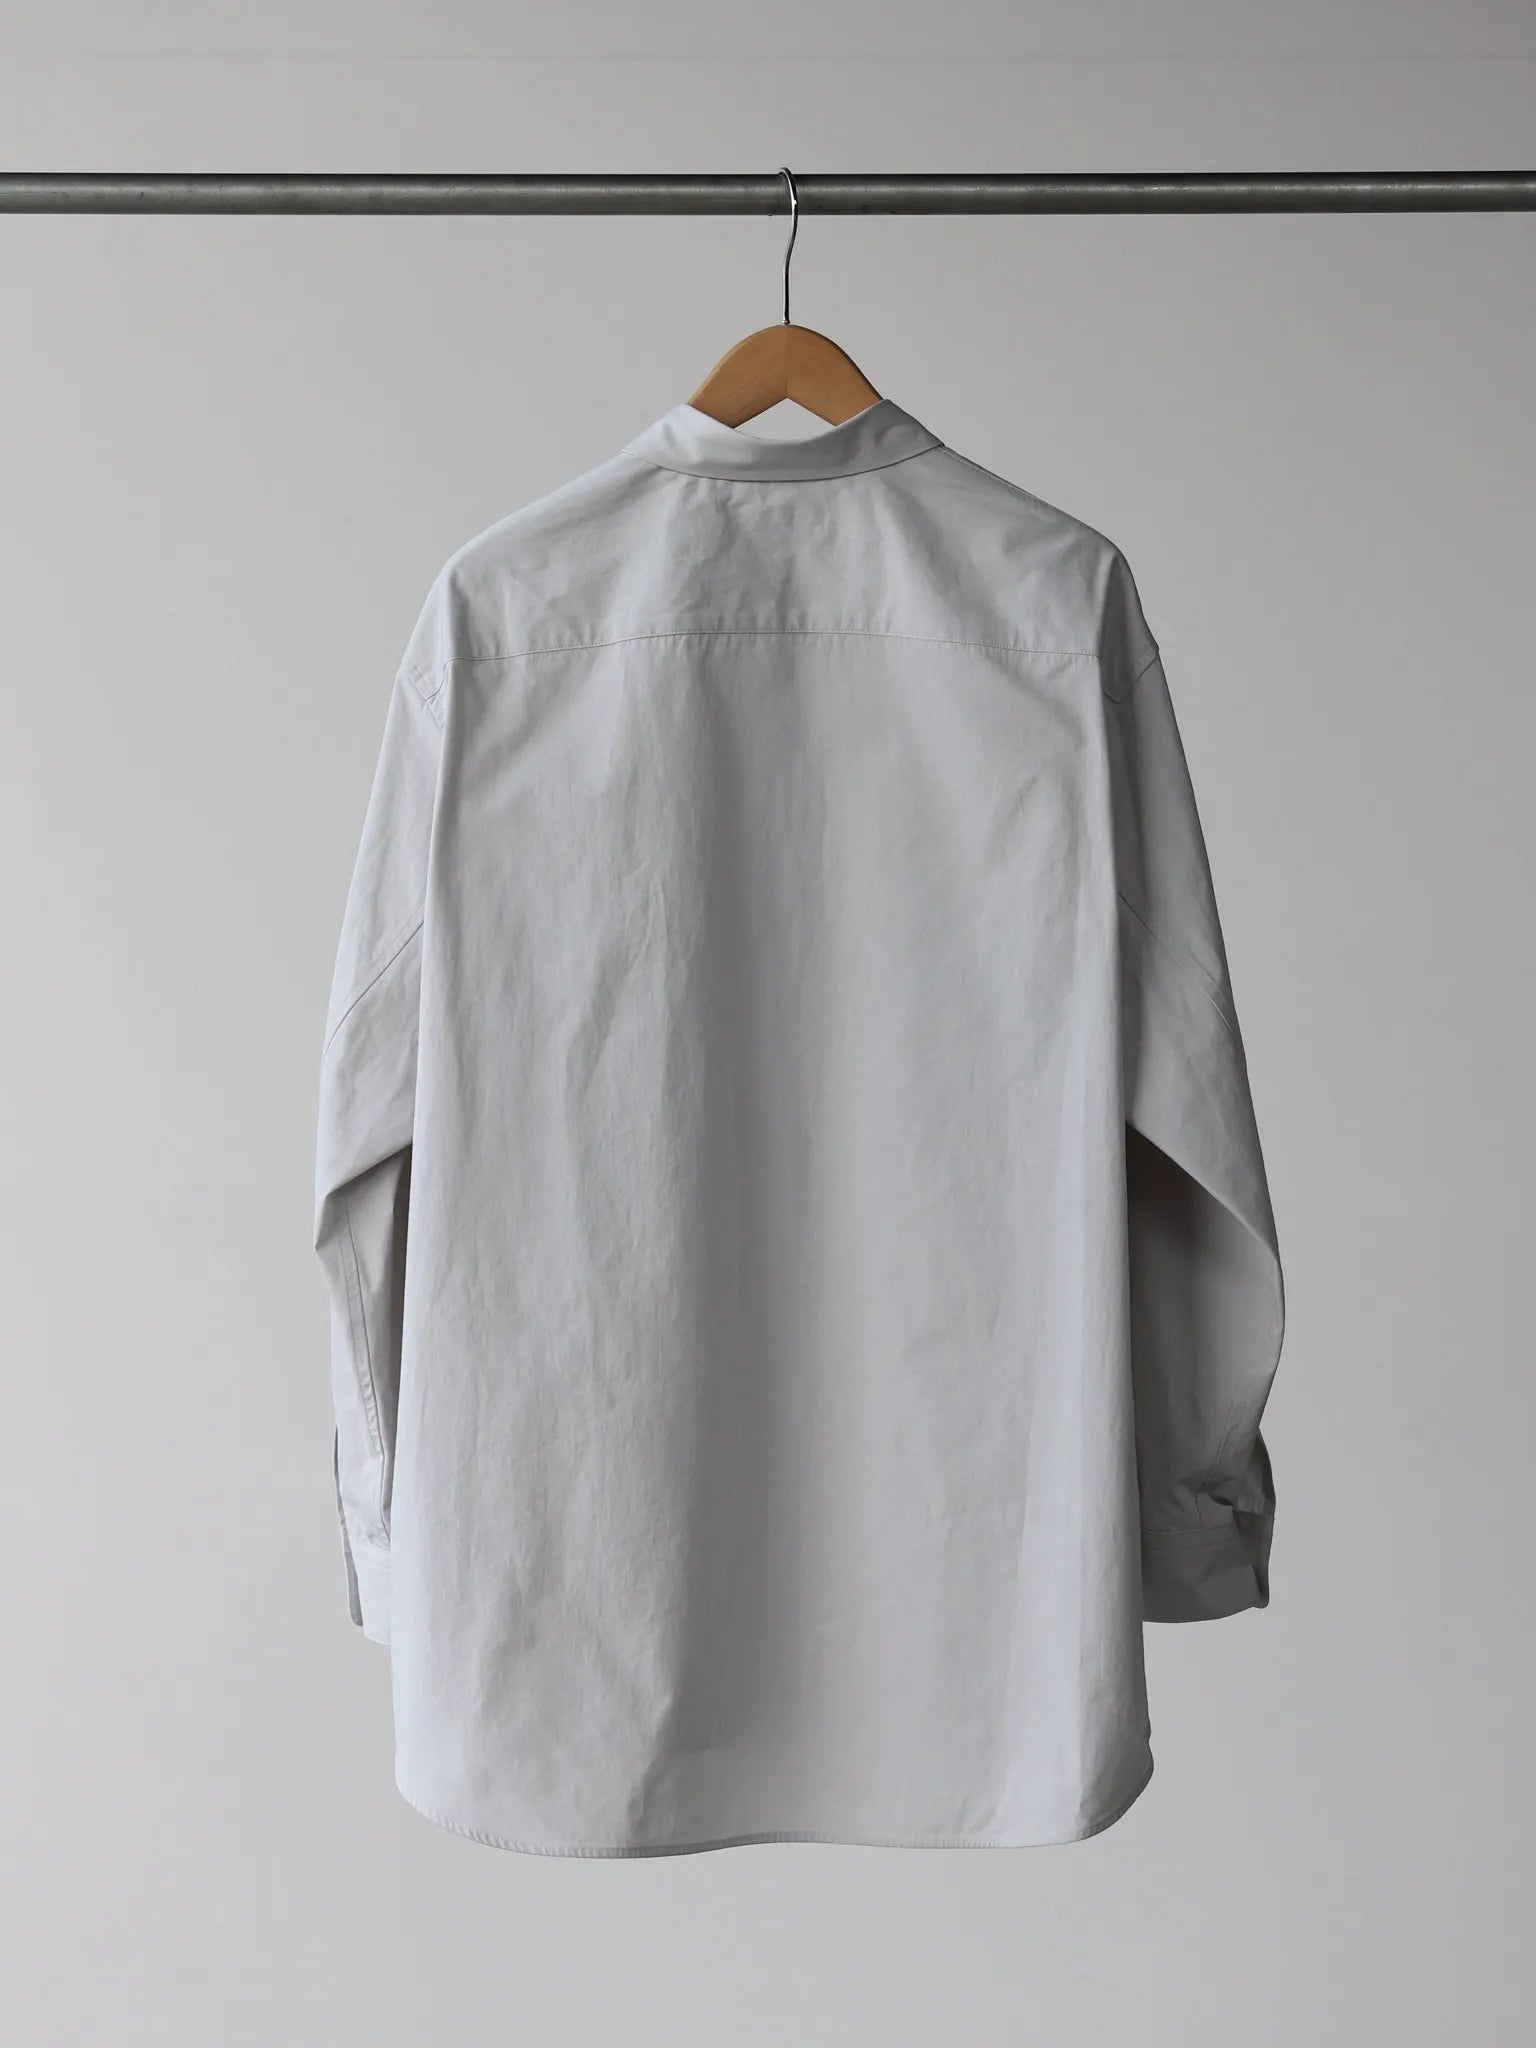 aubett-heavy-broad-oversized-shirt-gray-2